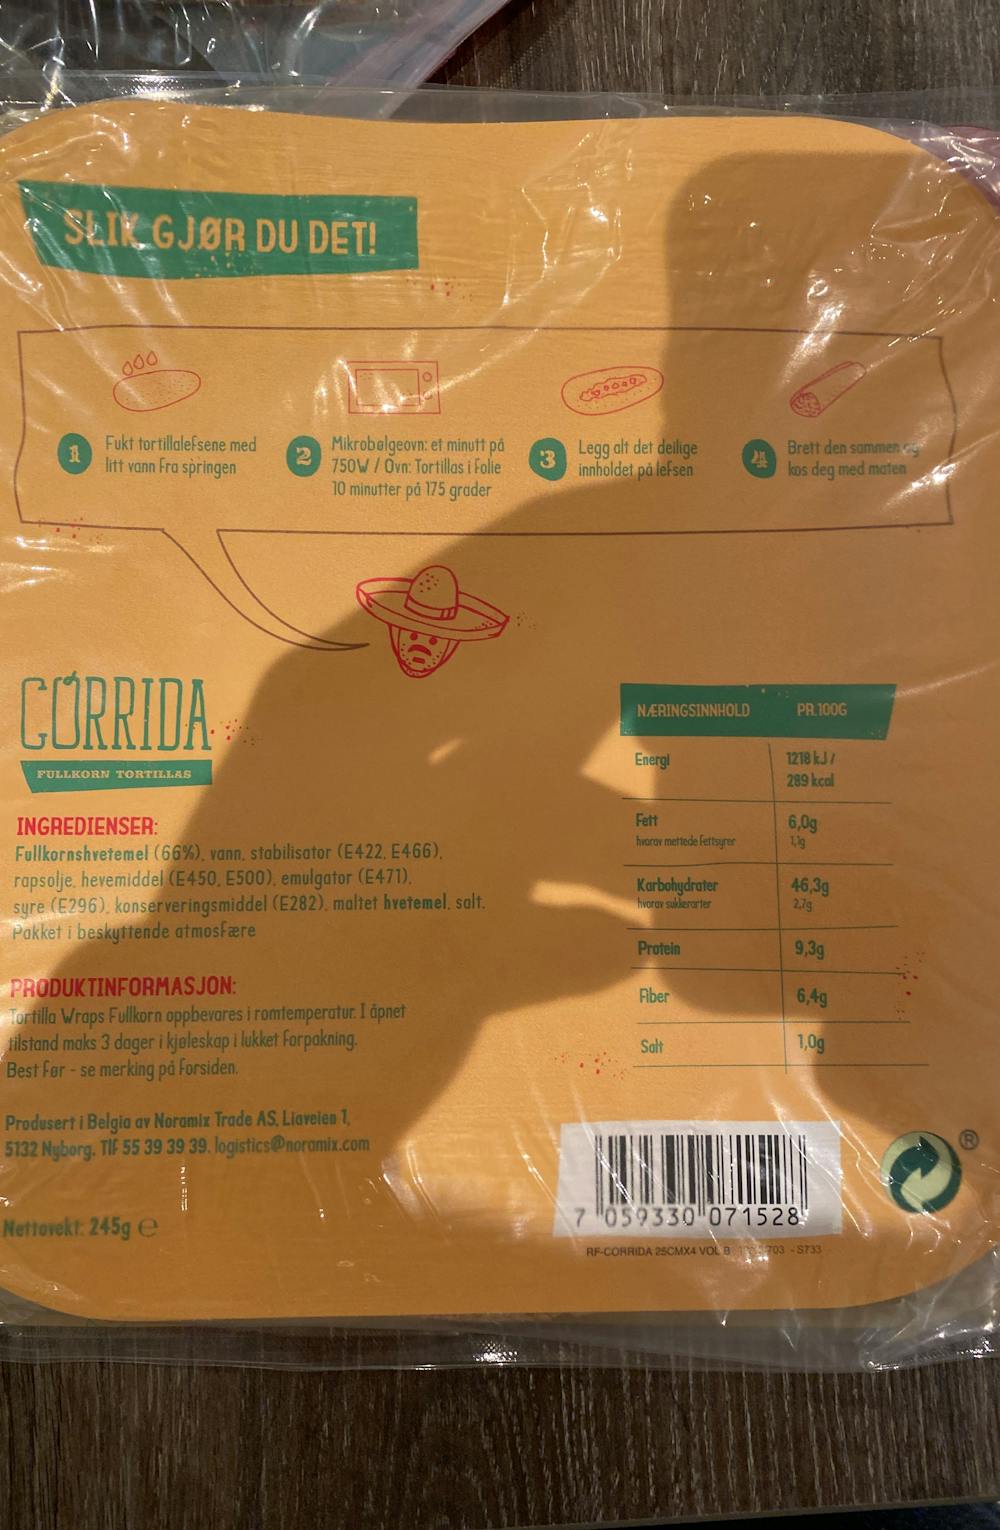 Ingredienslisten til Fullkorn tortillas, Gorrida